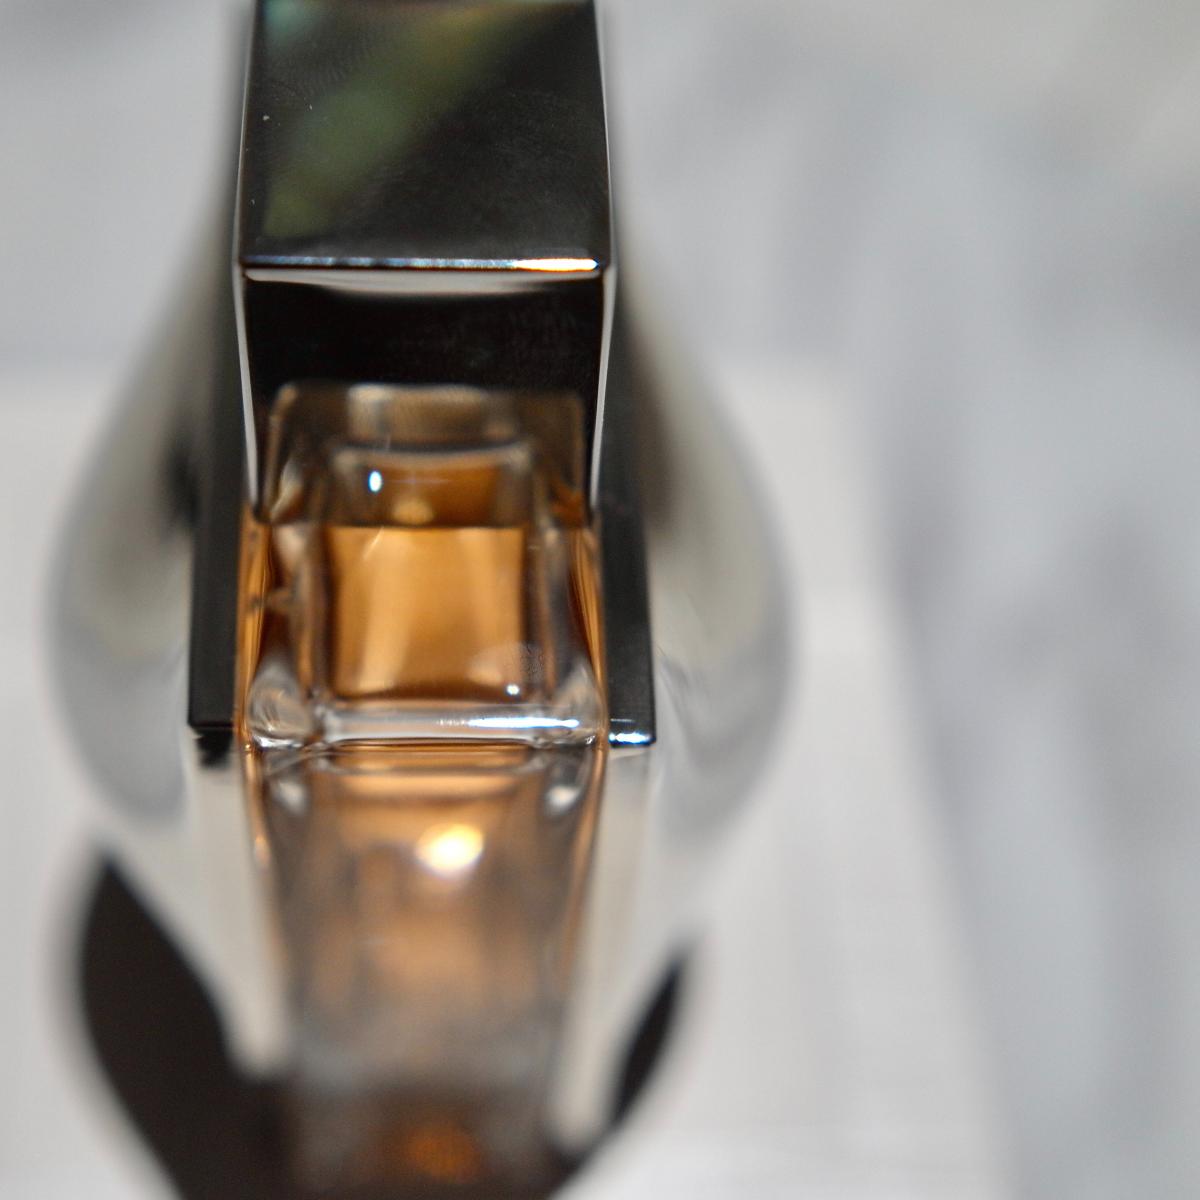 Mikimoto Eau de Parfum Mikimoto perfume - a fragrance for women and men